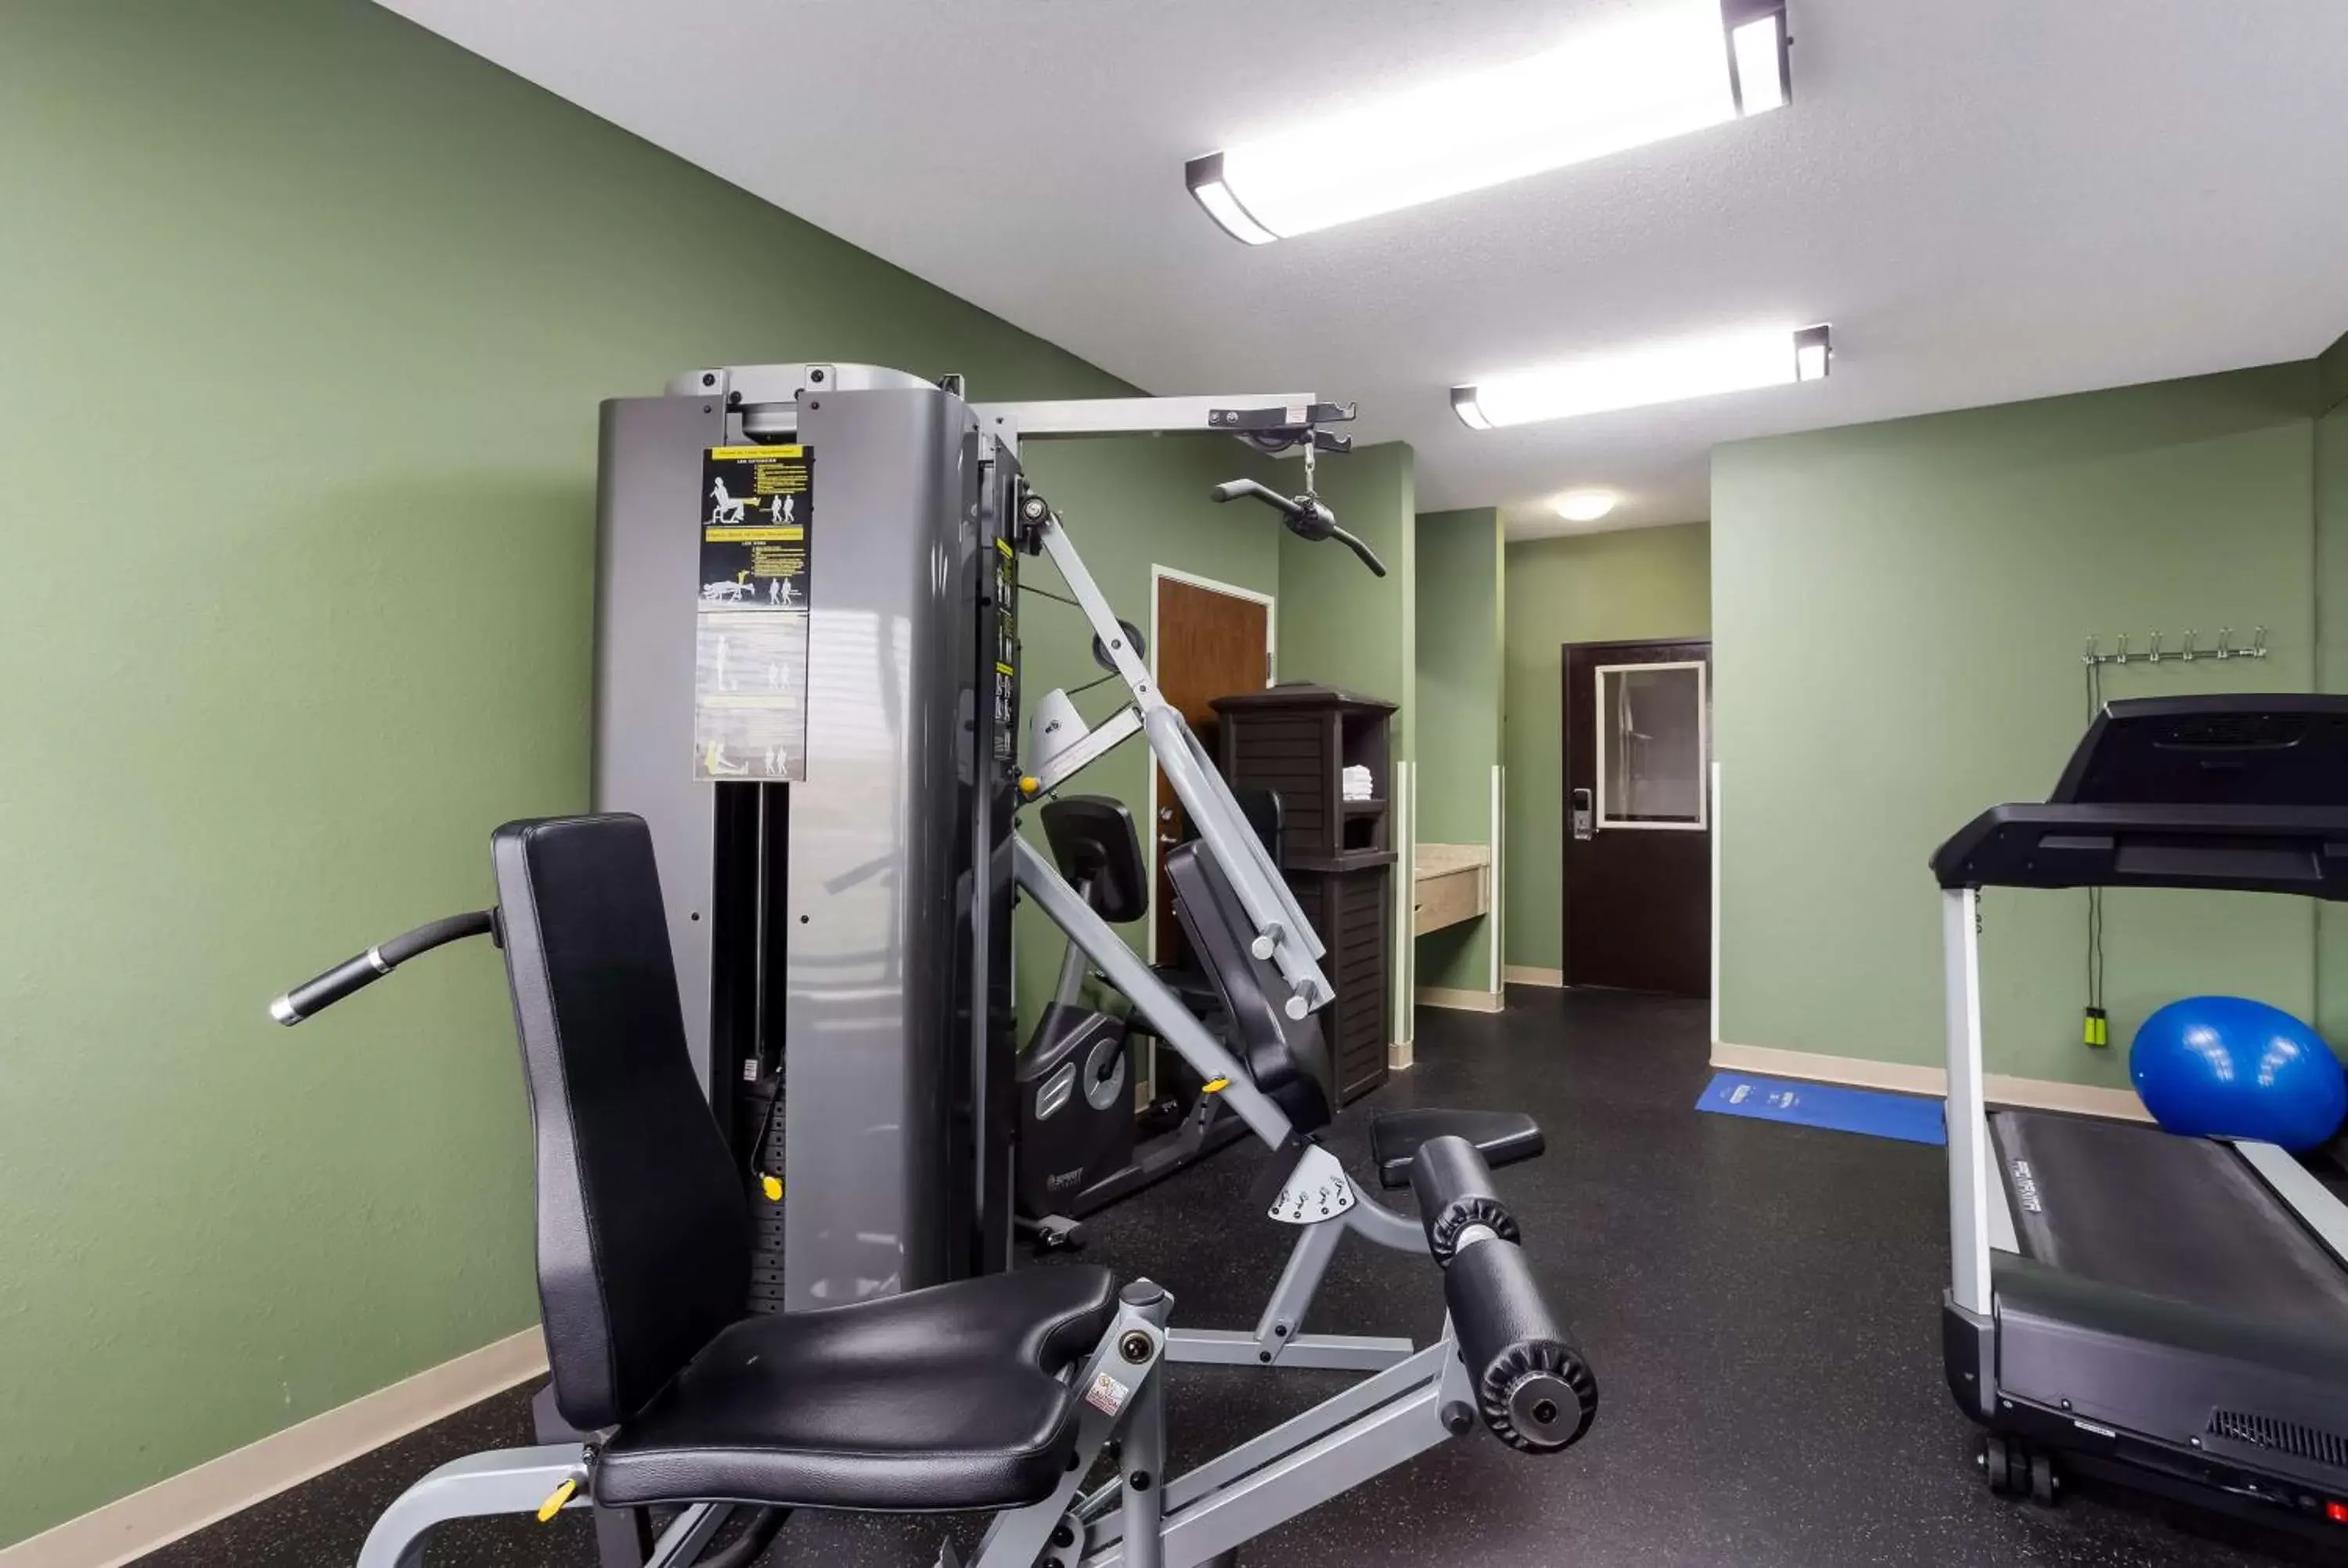 Fitness centre/facilities, Fitness Center/Facilities in Best Western Crossroads Inn